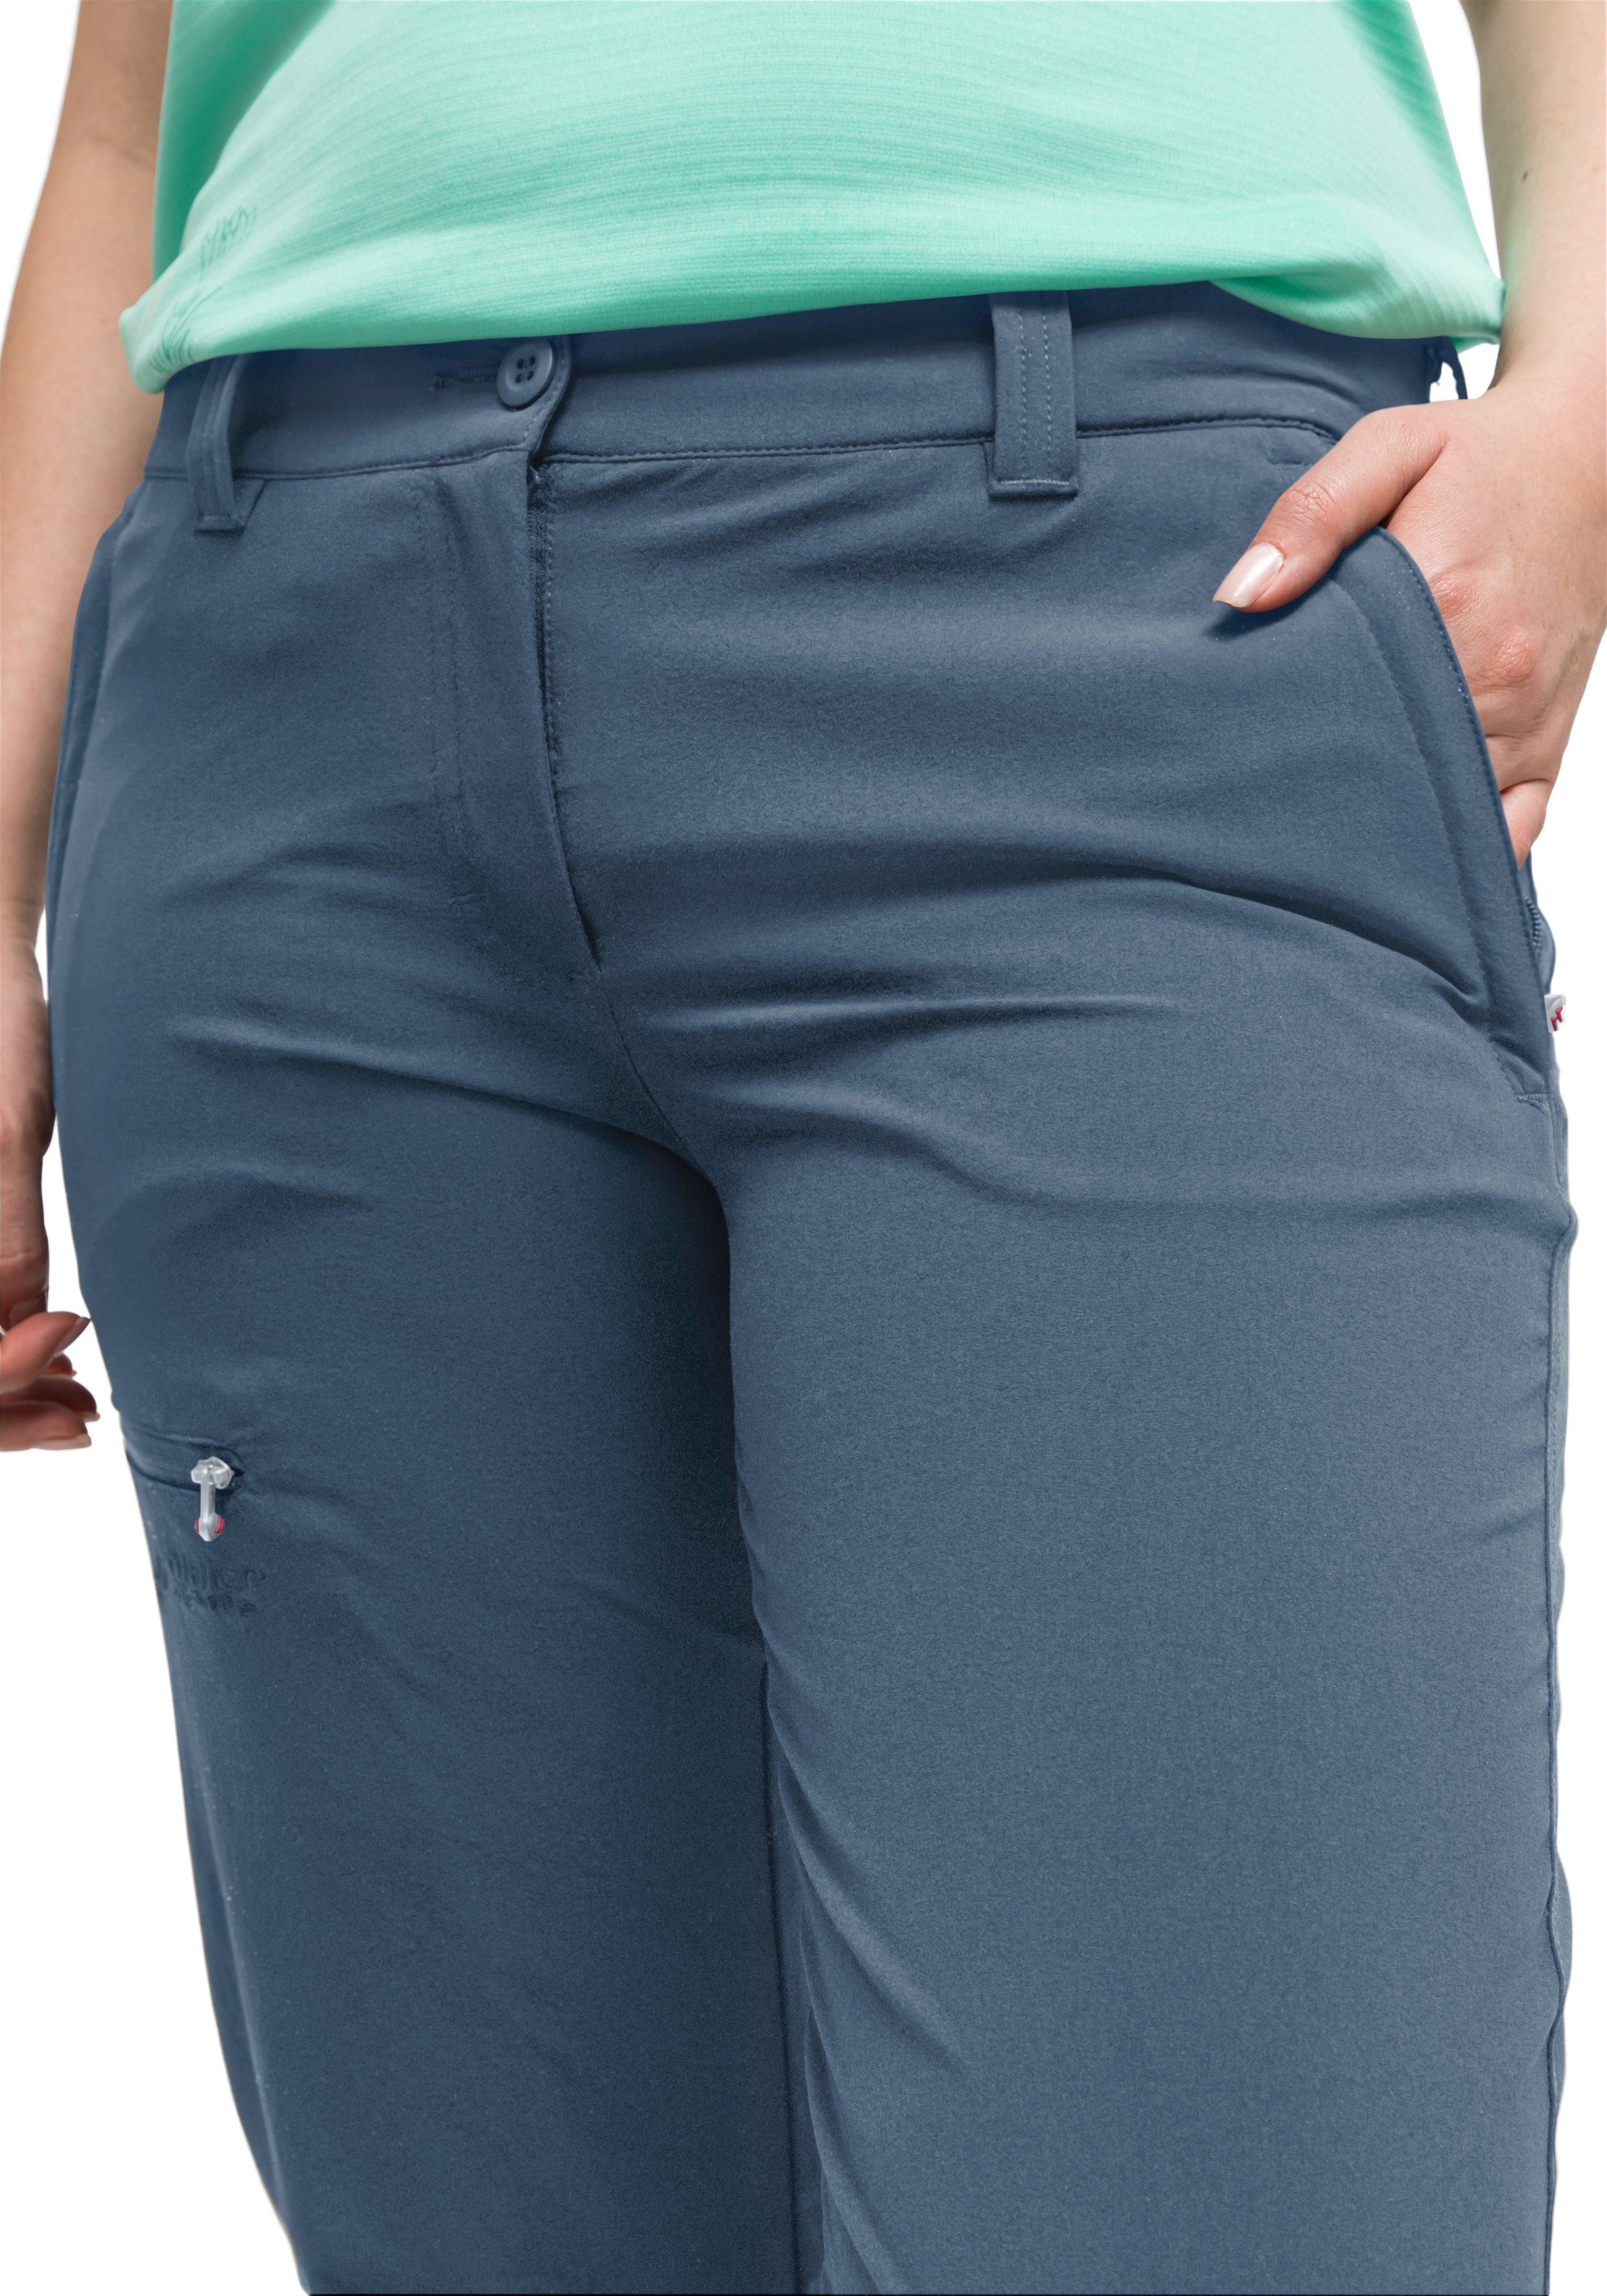 atmungsaktive Maier 7/8 Outdoor-Hose Funktionshose jeansblau Sports Damen und Wanderhose, Lulaka elastische